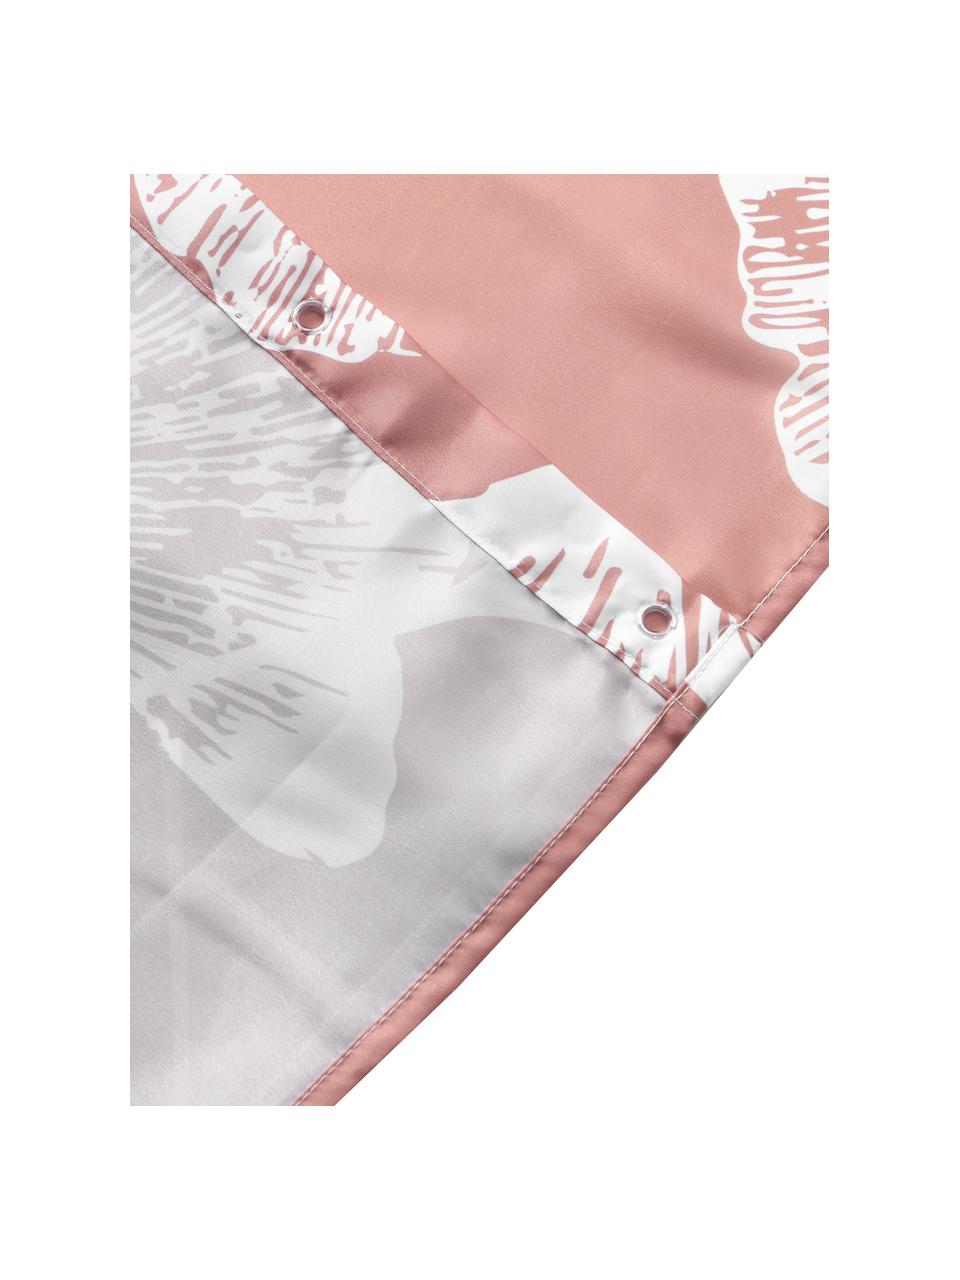 Douchegordijn Mare in roze, 100% polyester, Donkerroze, wit, B 180 x L 200 cm